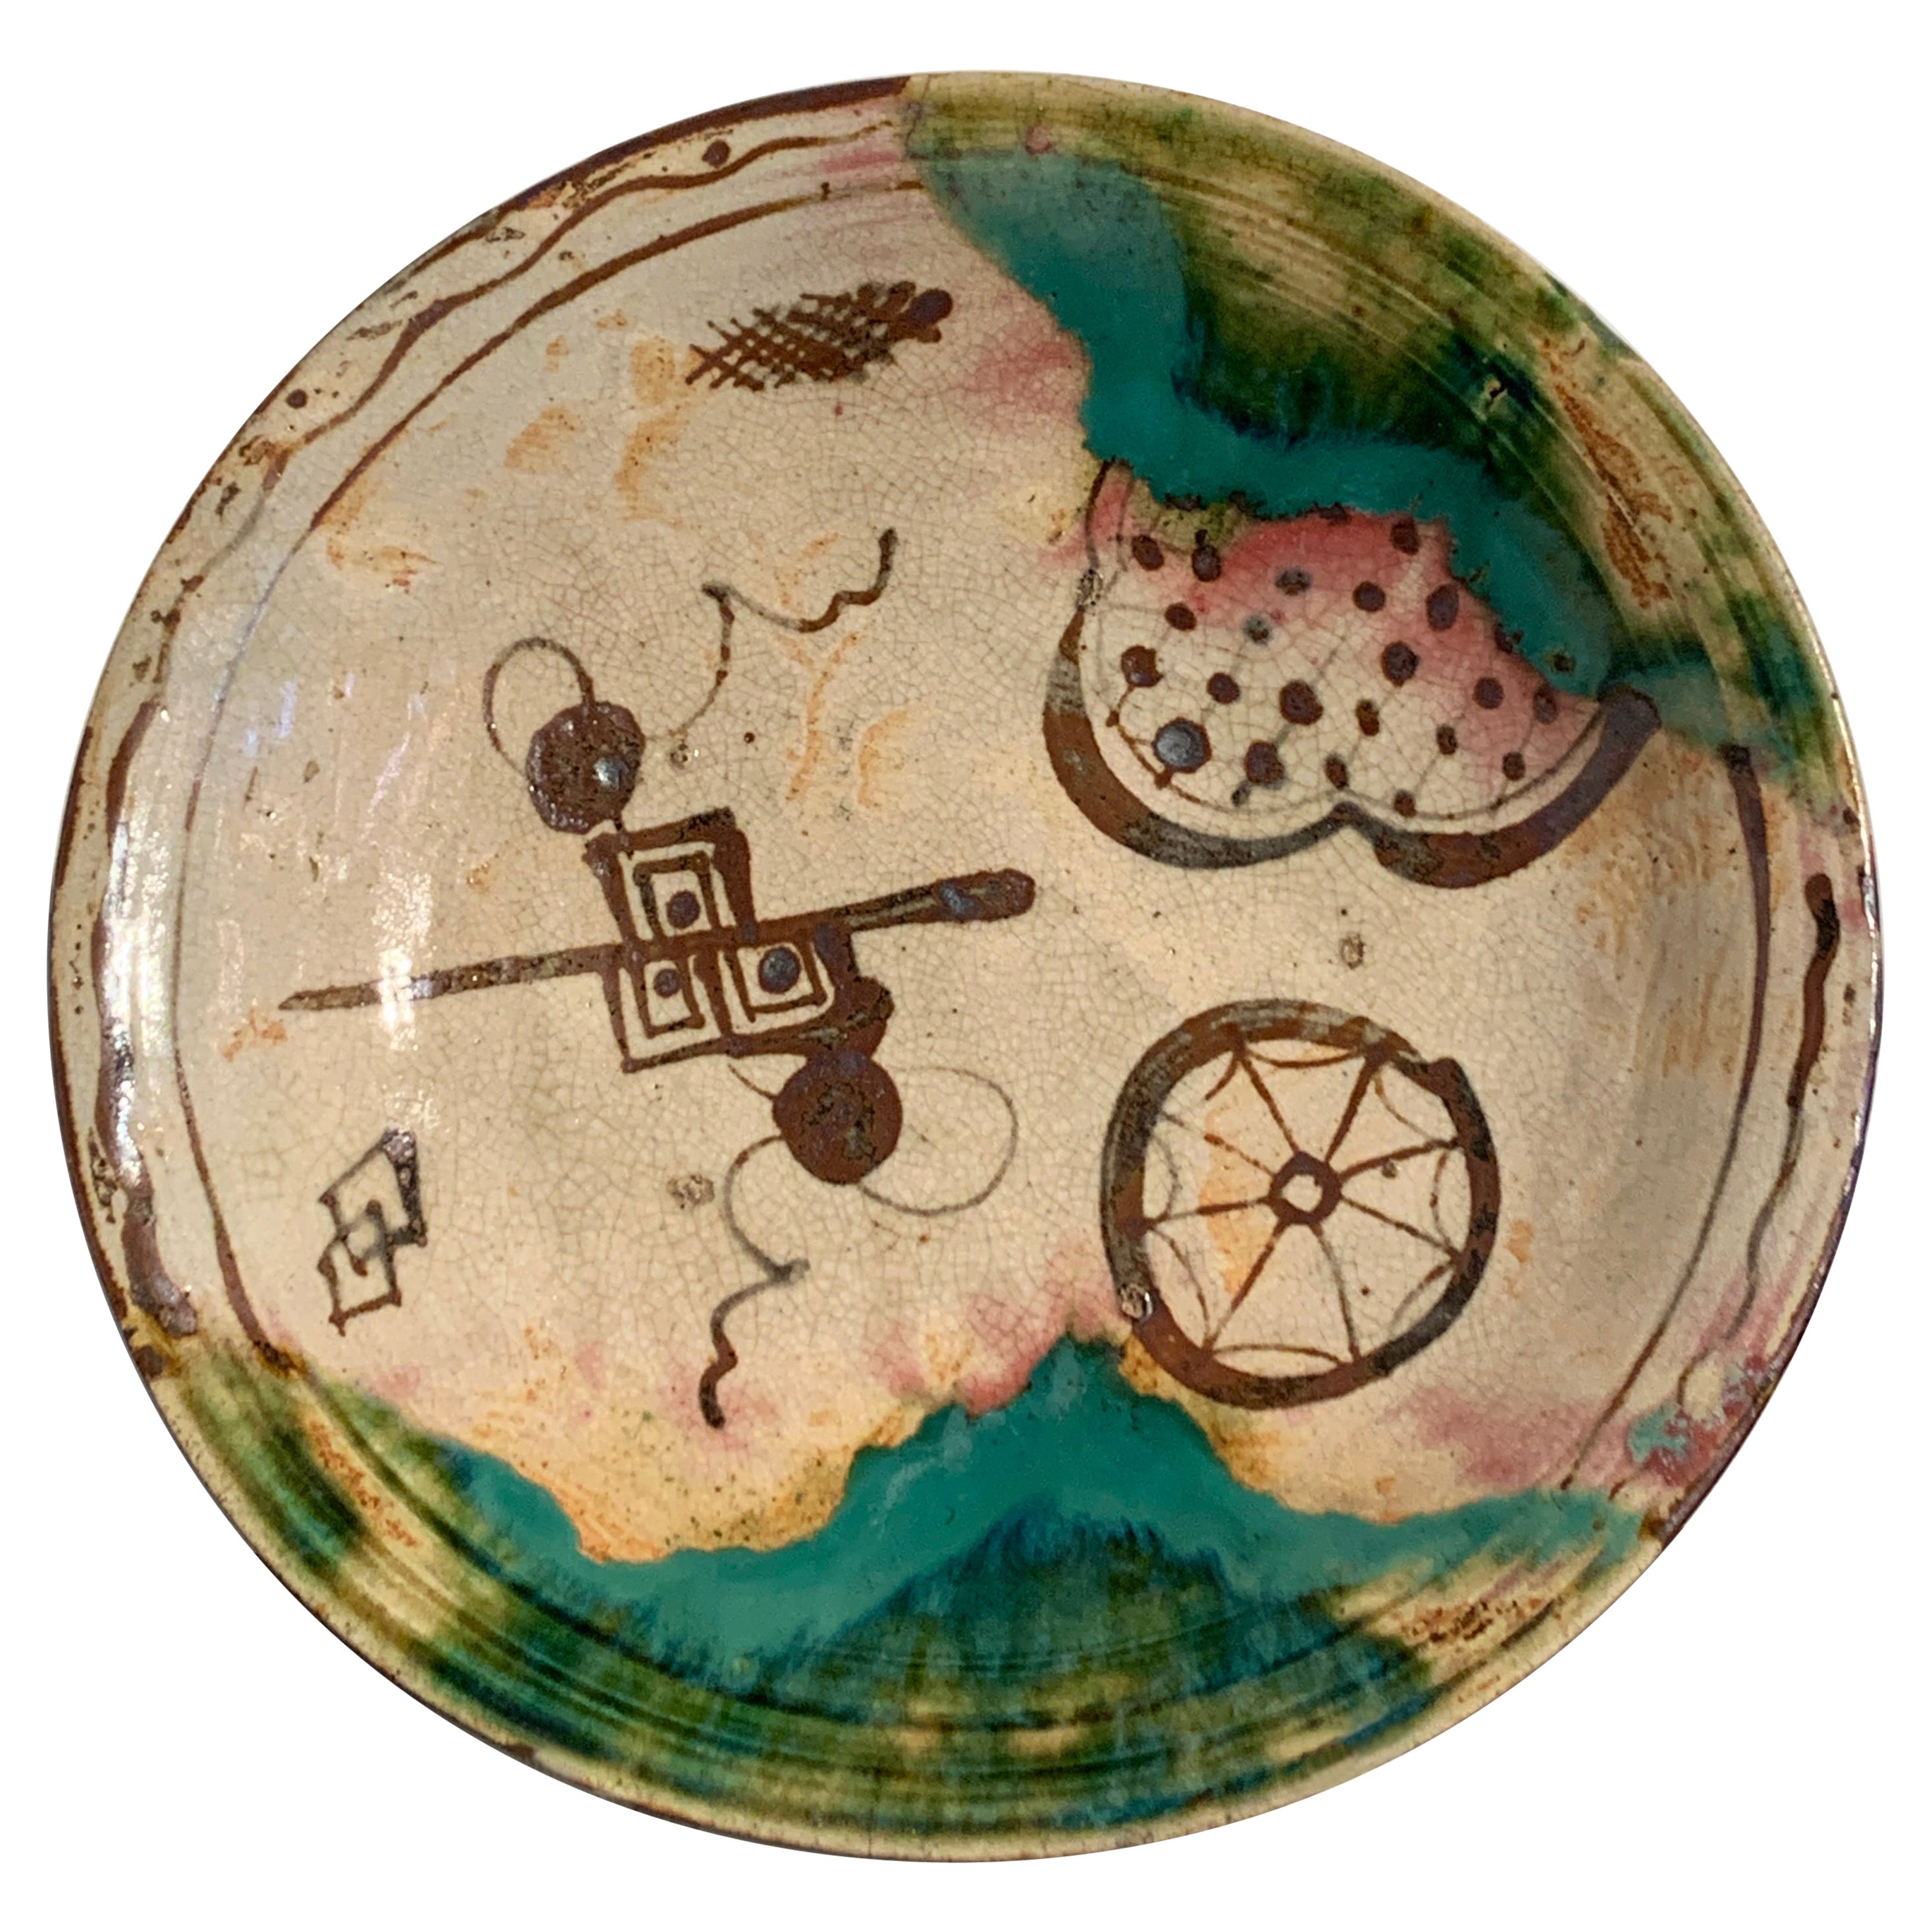 Japanese Ao-Oribe Glazed Stoneware Dish, Early Edo Period, 17th Century, Japan